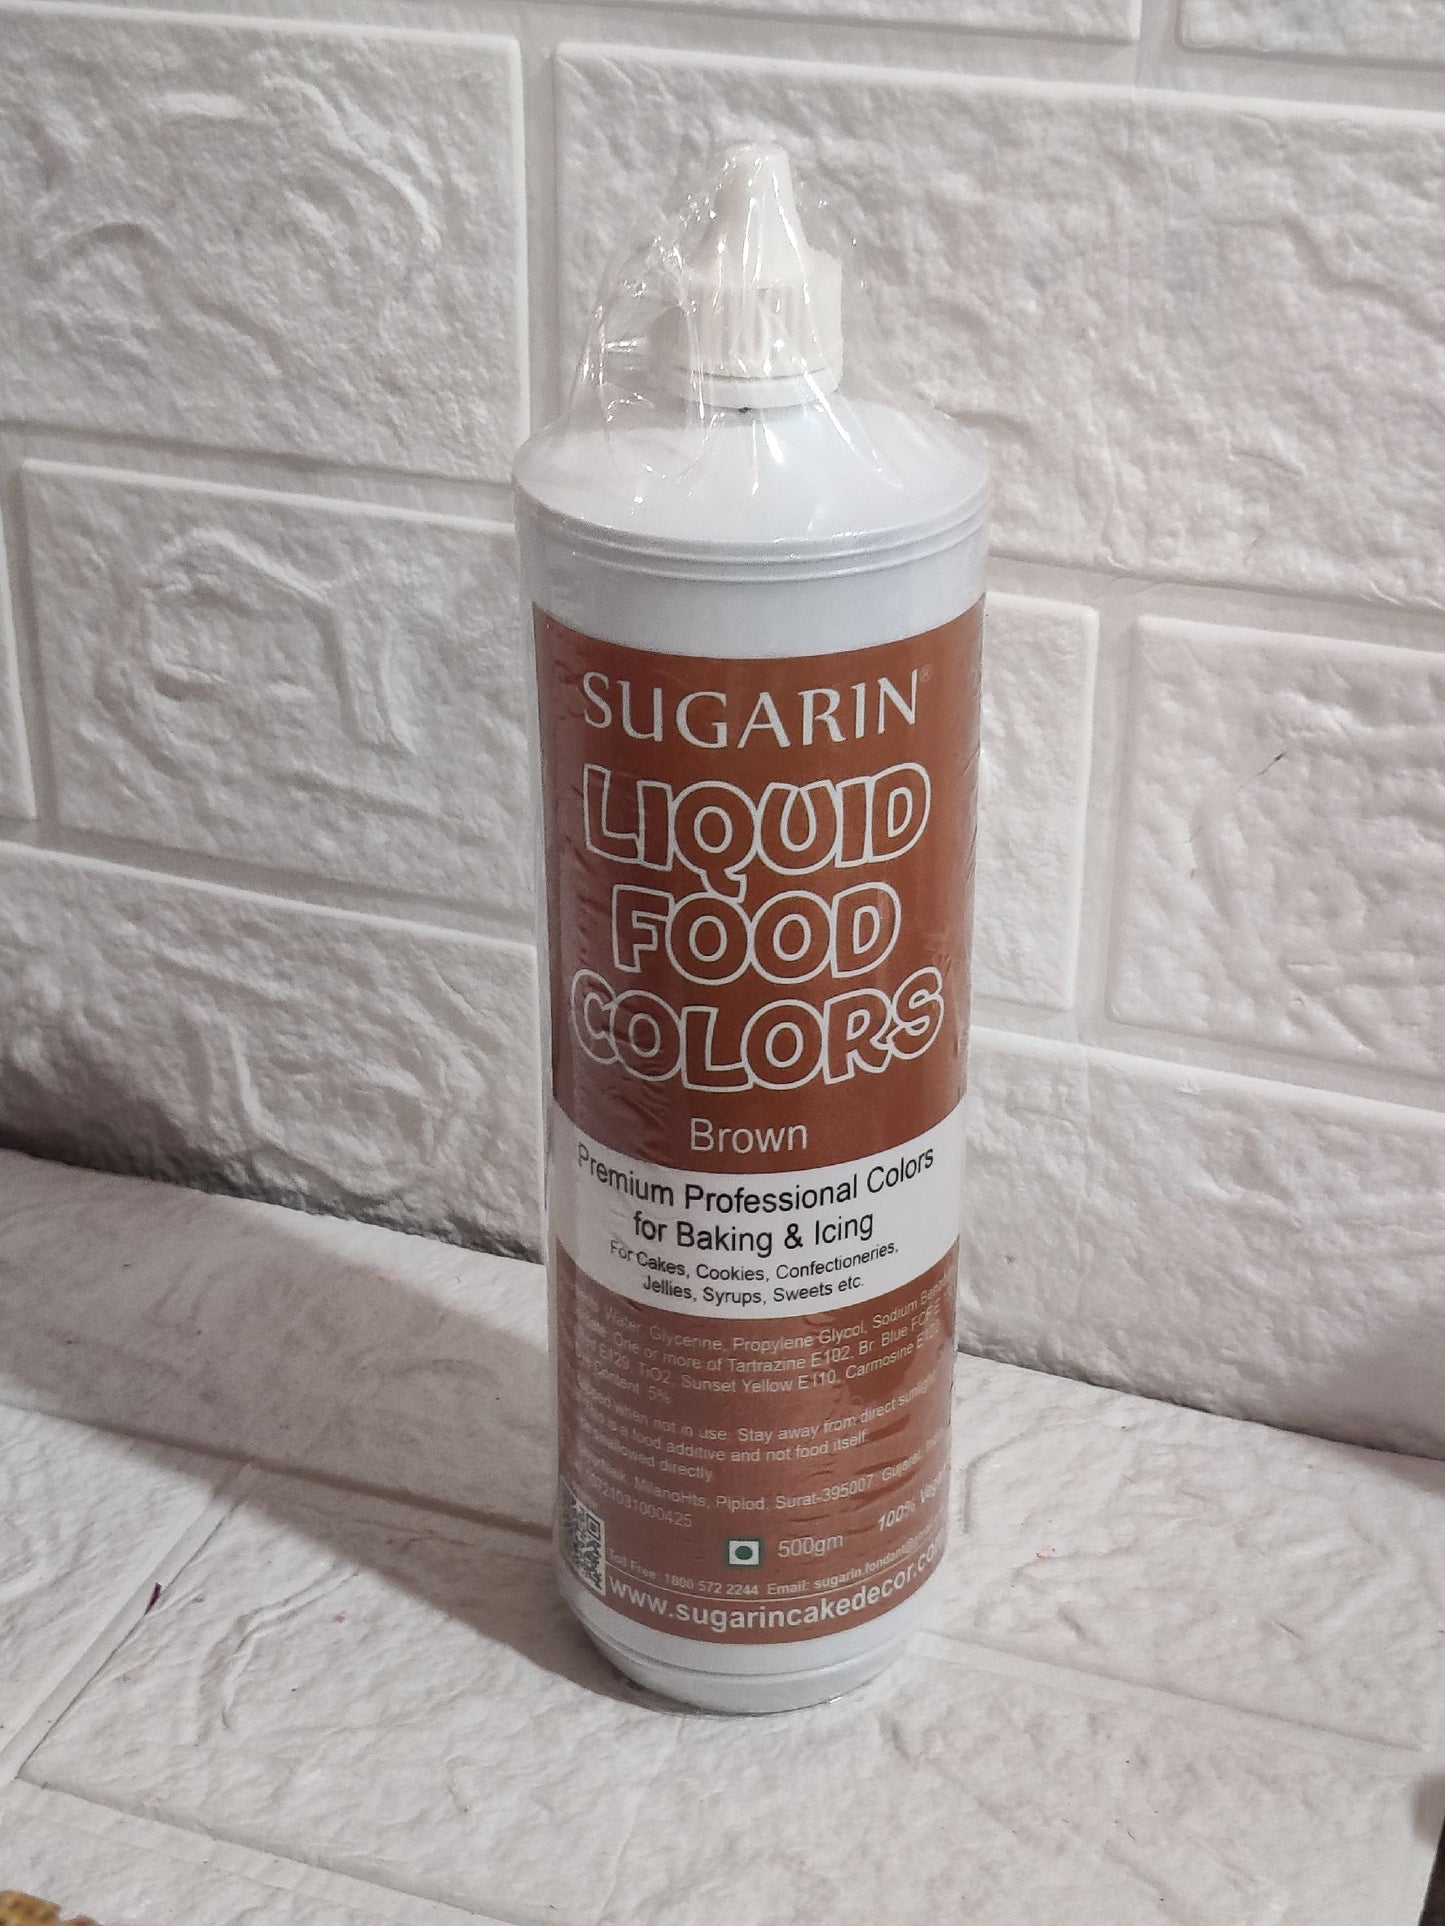 Sugarin Brown Liquid Food Color 500gm